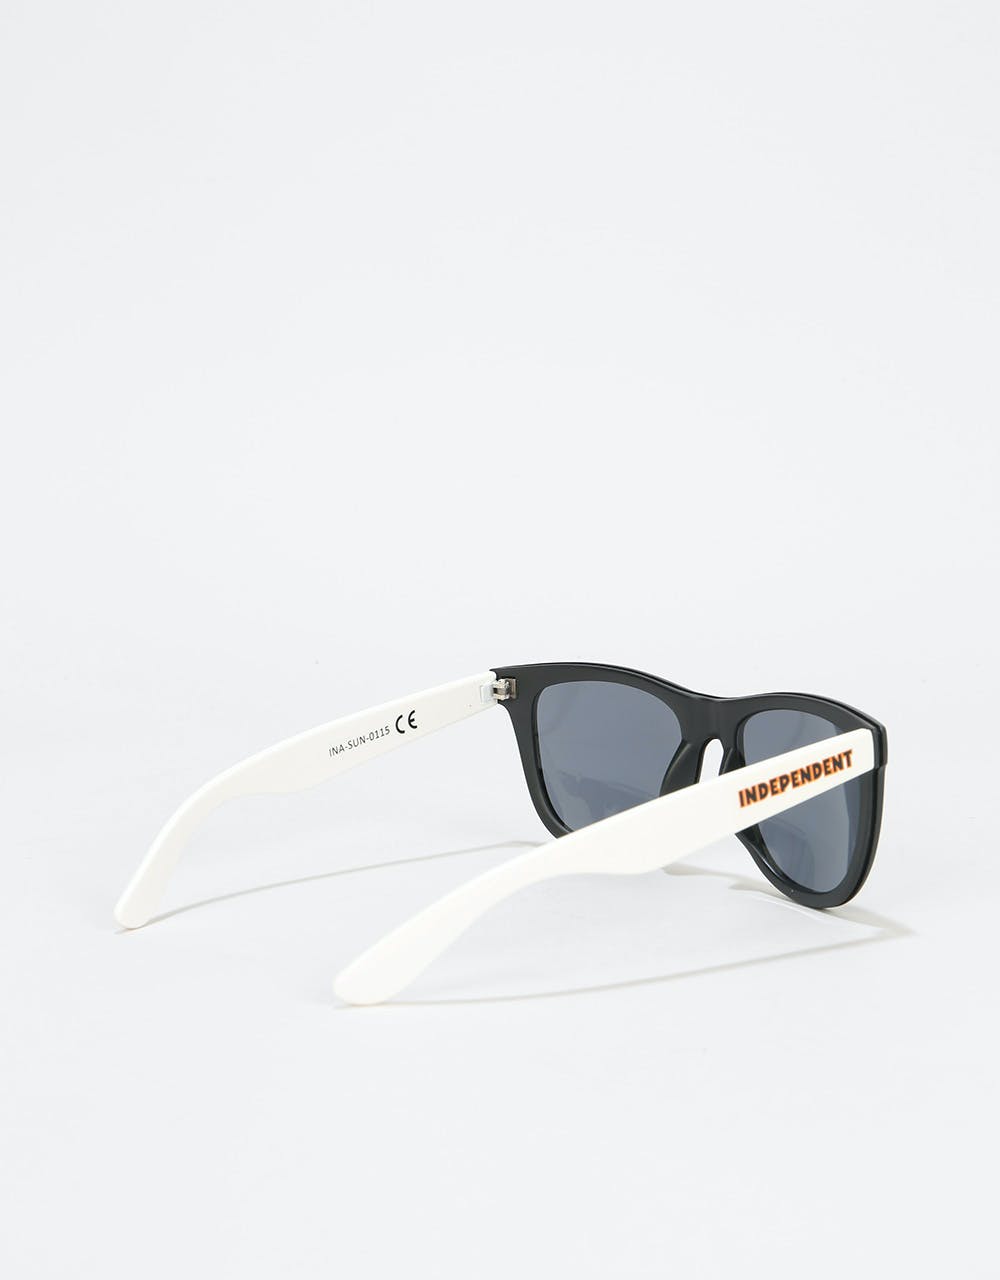 Independent Bar Cross Primary Sunglasses - Black/White